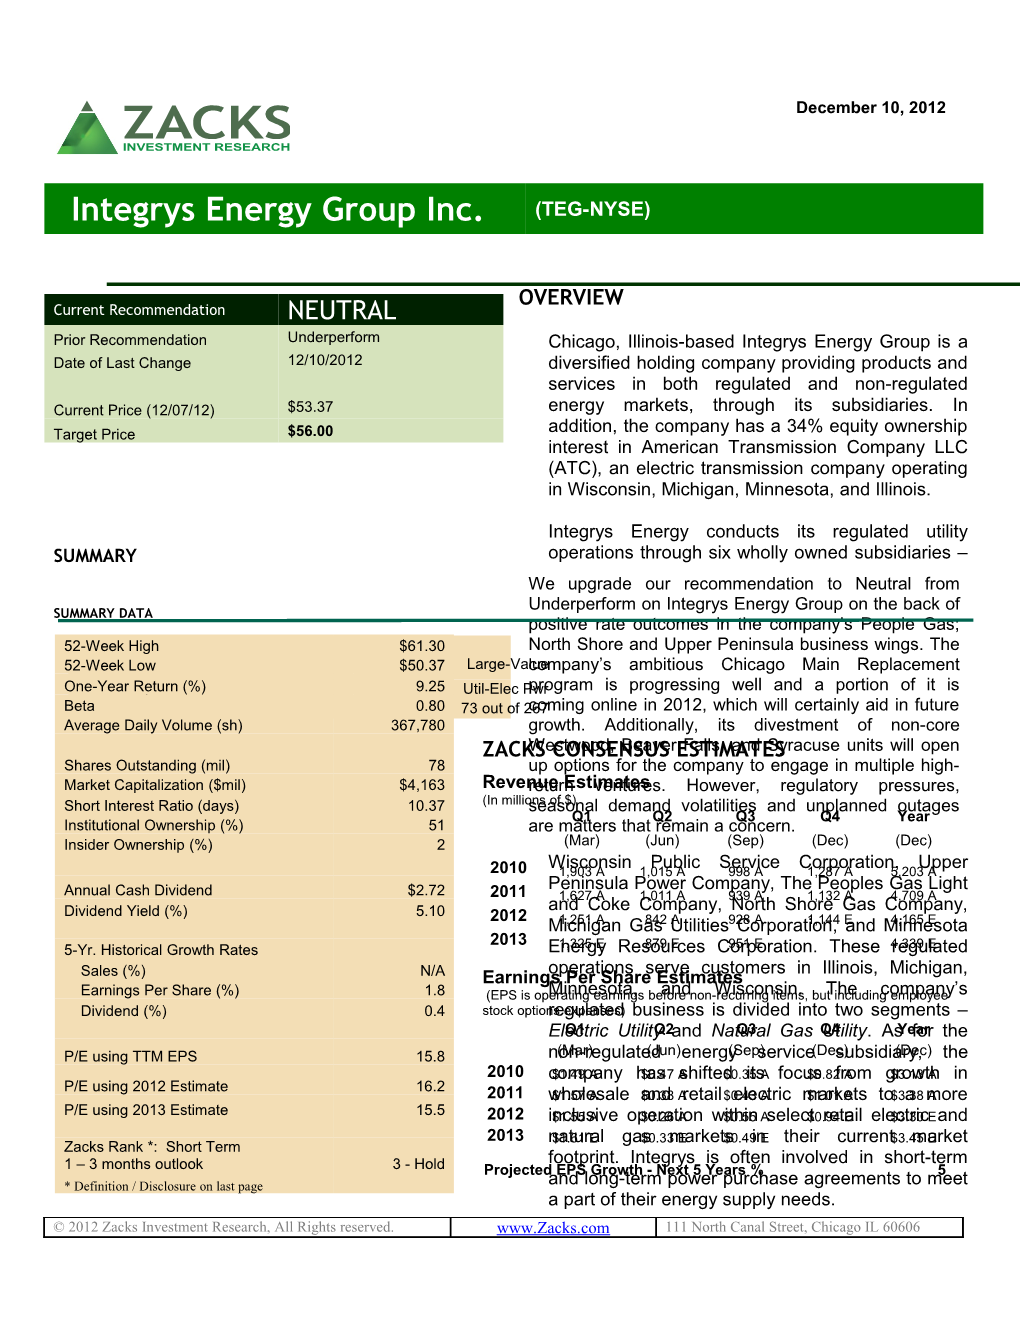 Integrys Energy Group Inc